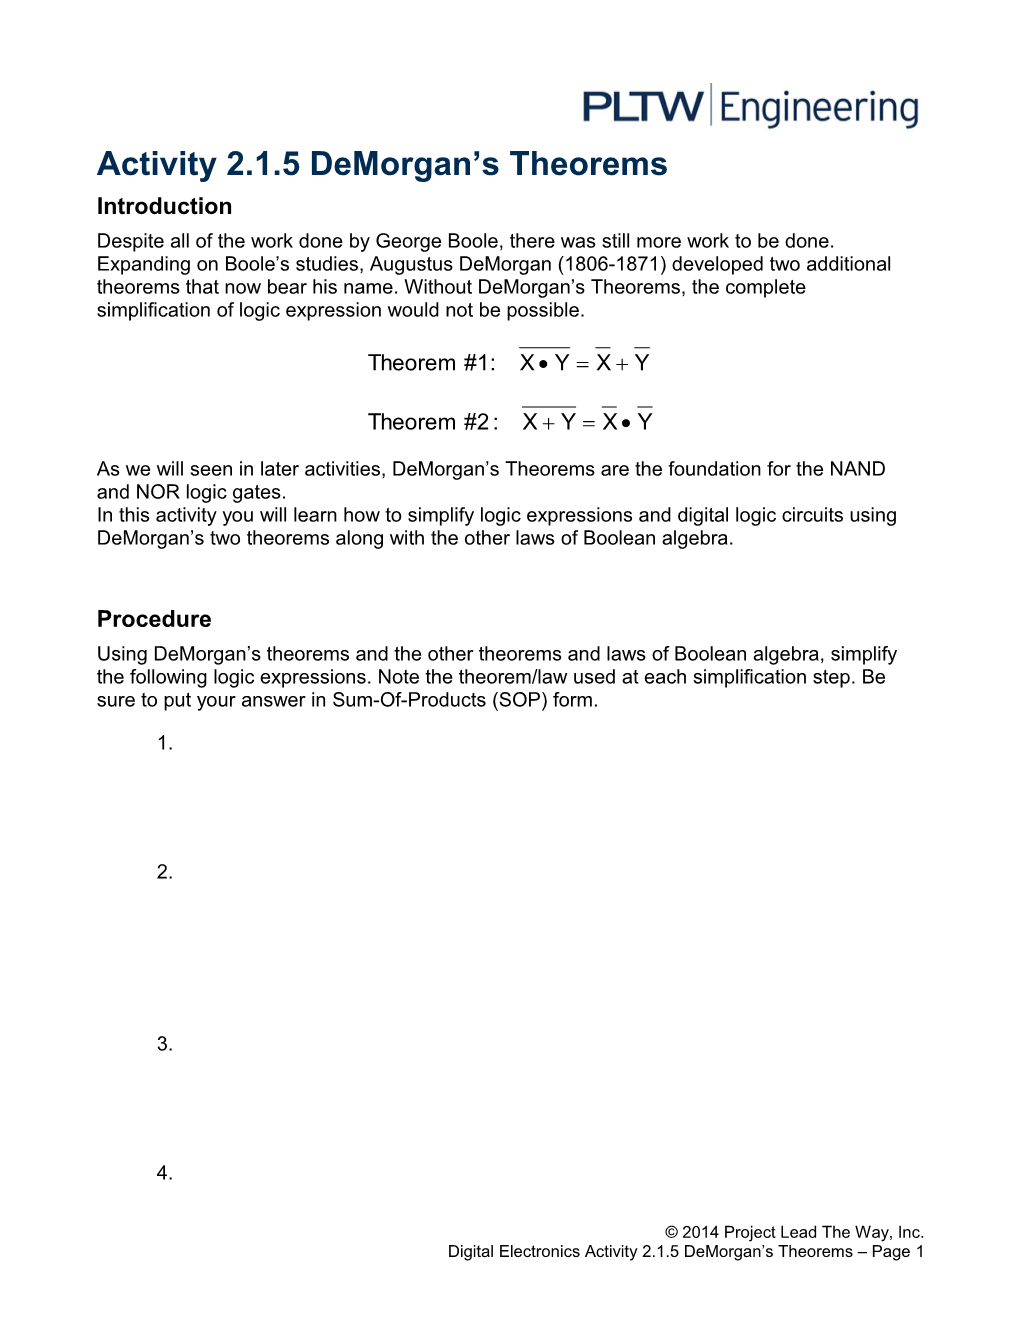 Activity 2.1.5 Demorgan S Theorems